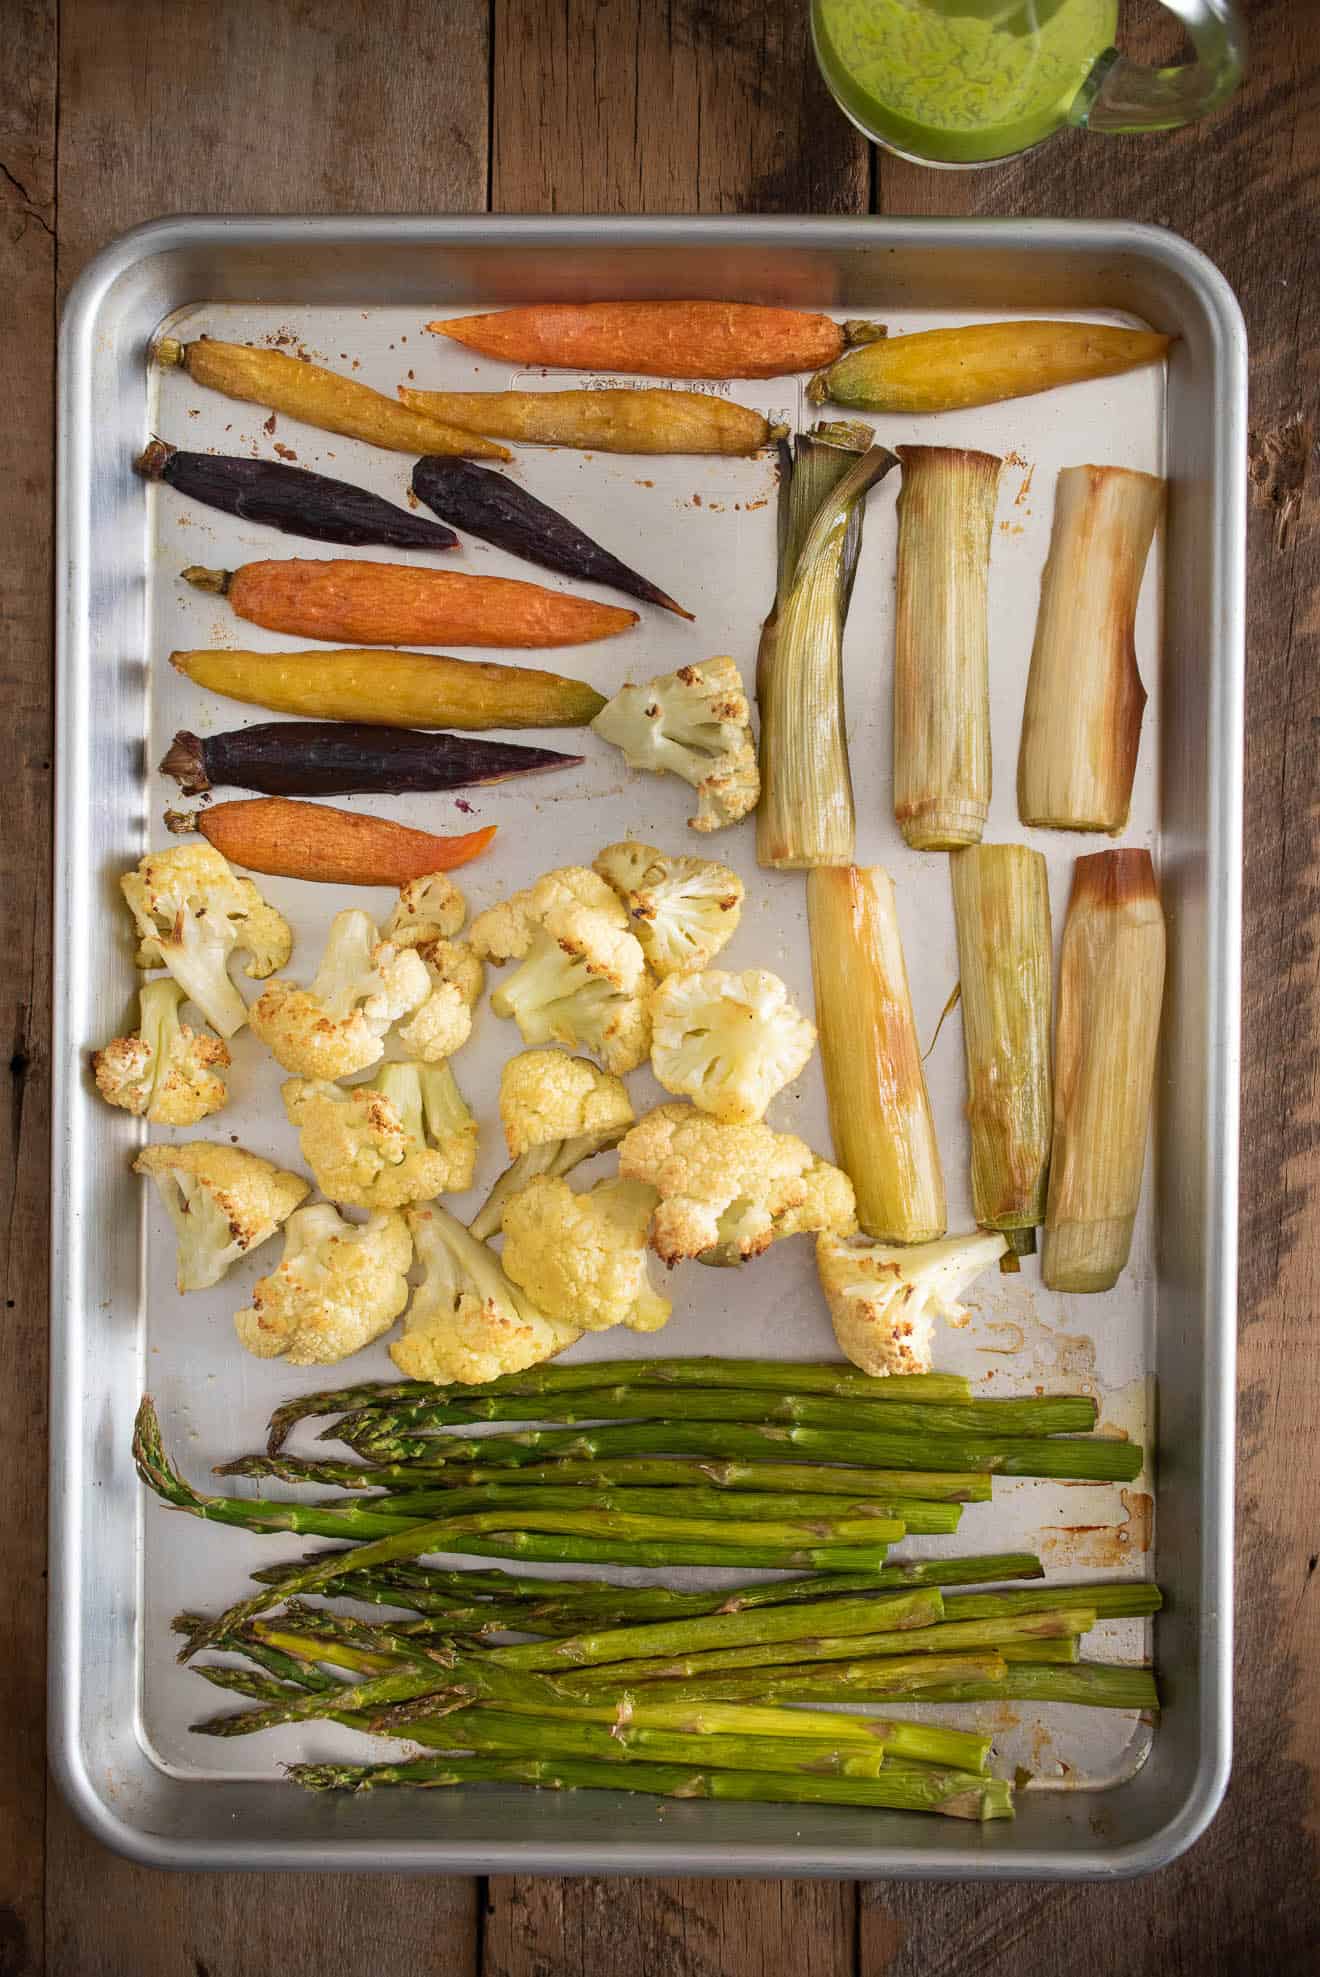 Asparagus, cauliflower, leeks and colorful carrots on a sheet pan freshly roasted